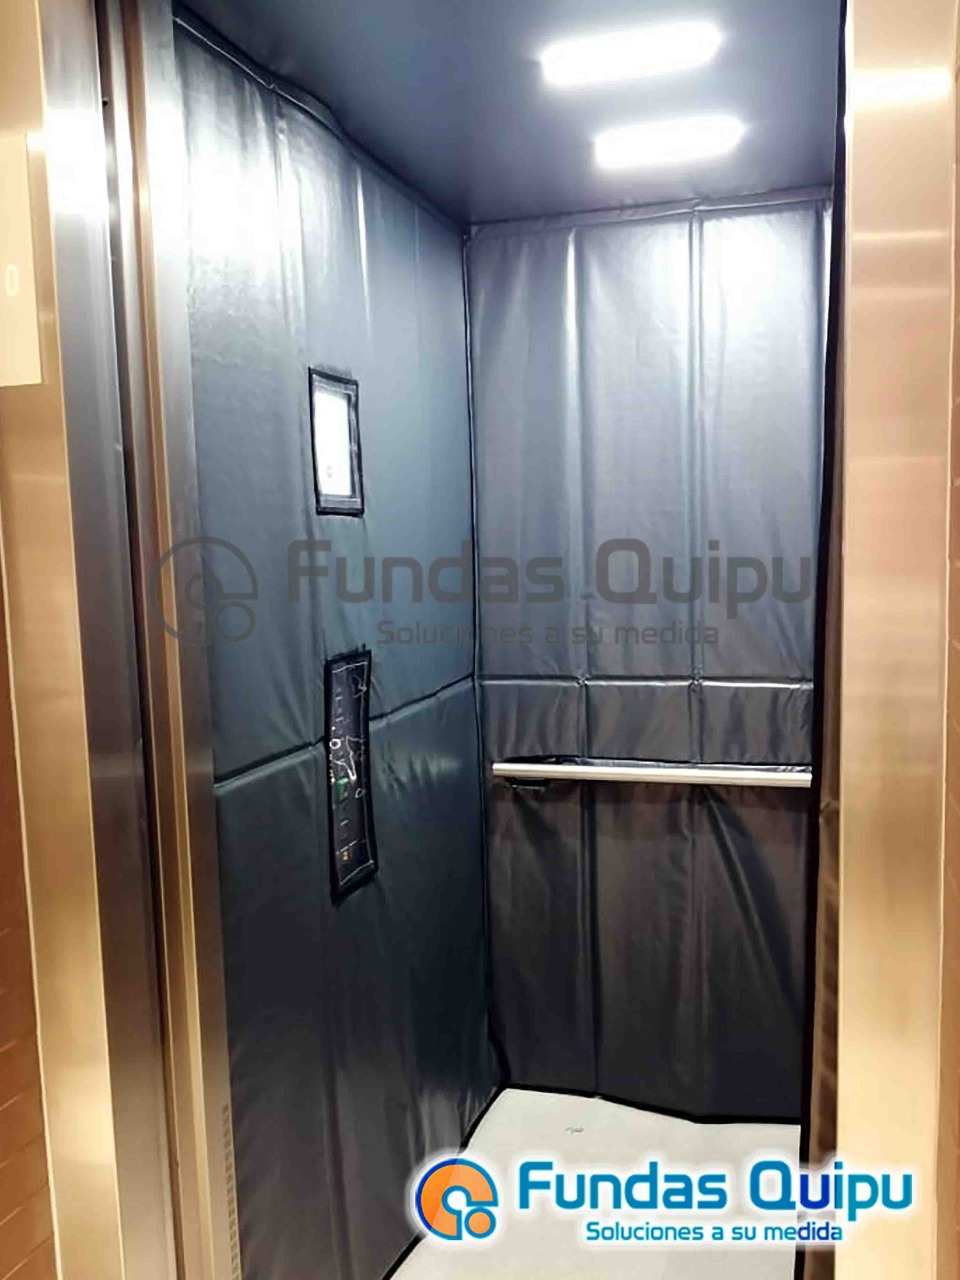 Protector para ascensor - Fundas Quipu